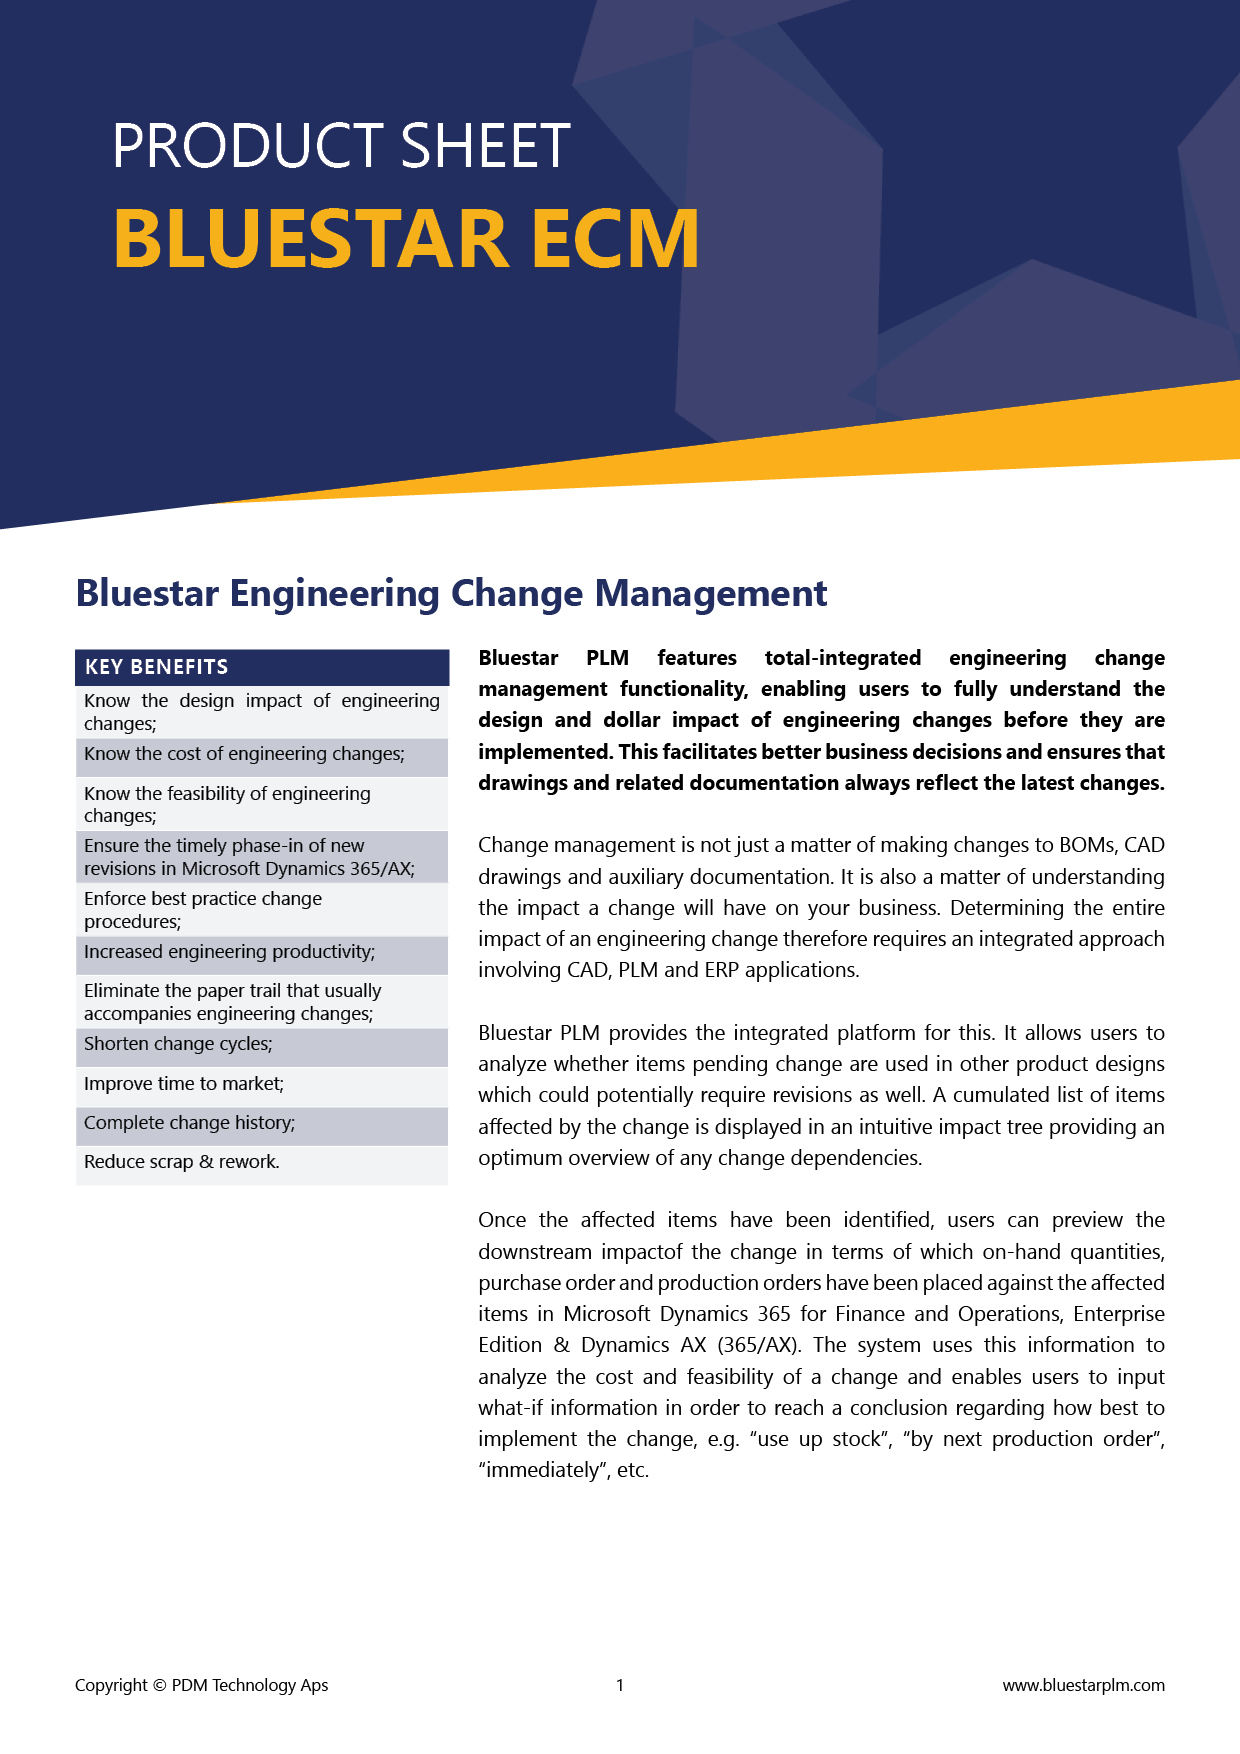 Bluestar Engineering Change Management (ECM) Product Sheet Thumbnail